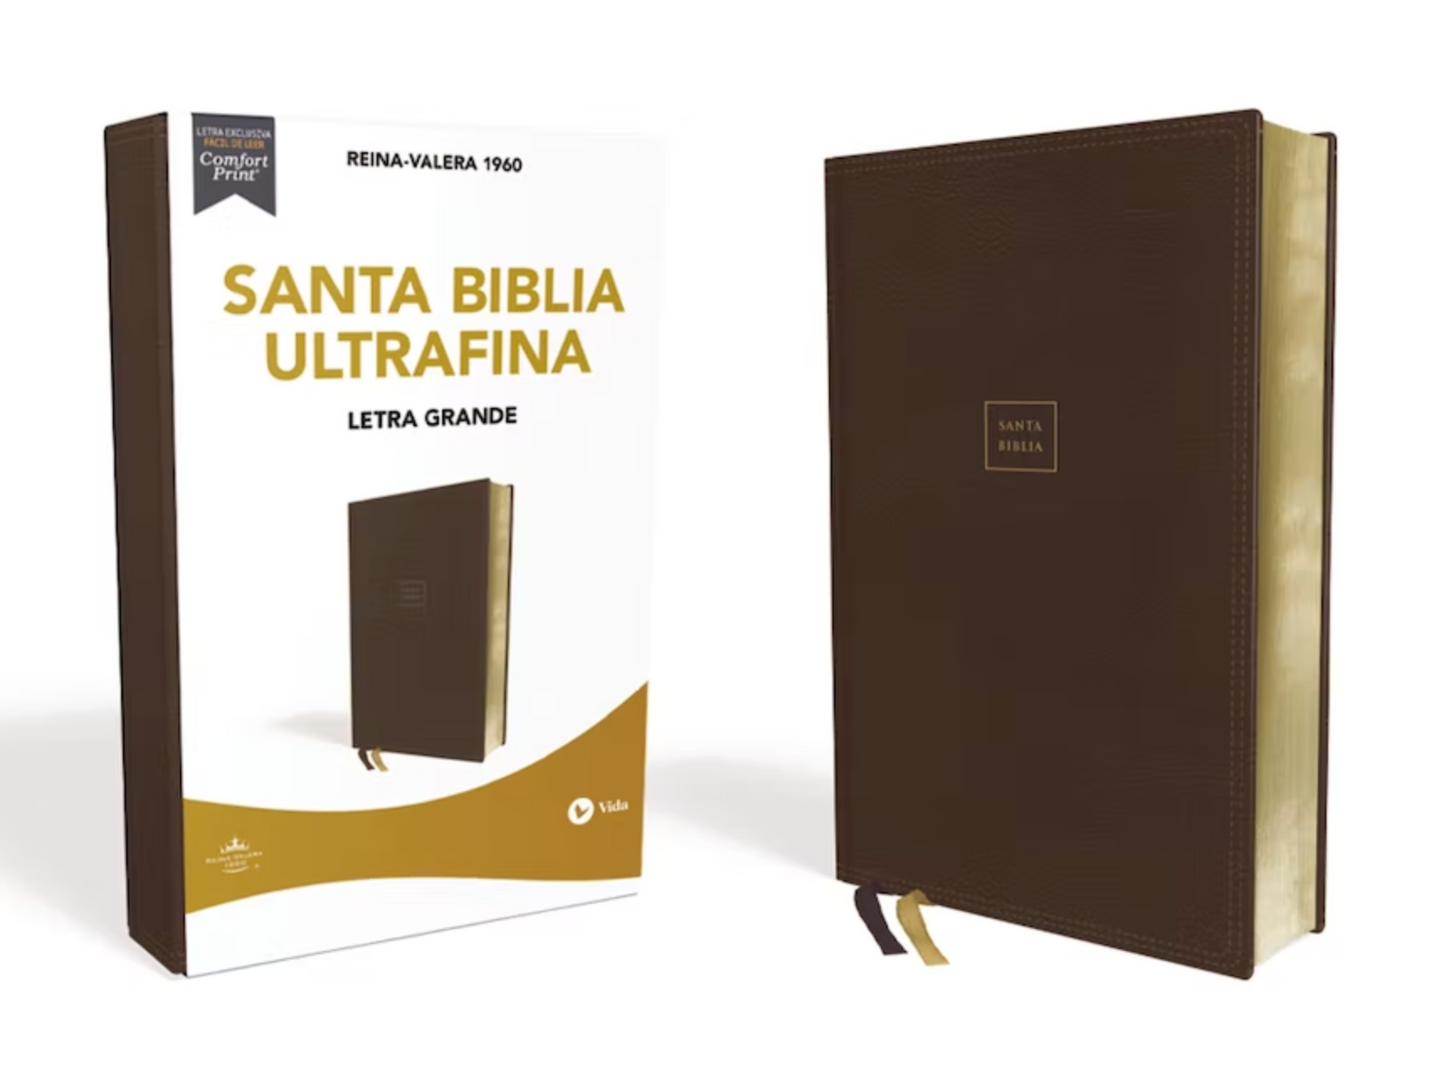 Santa Biblia Ultrafina - Letra Grande - RVR1960 - Café, Leathersoft